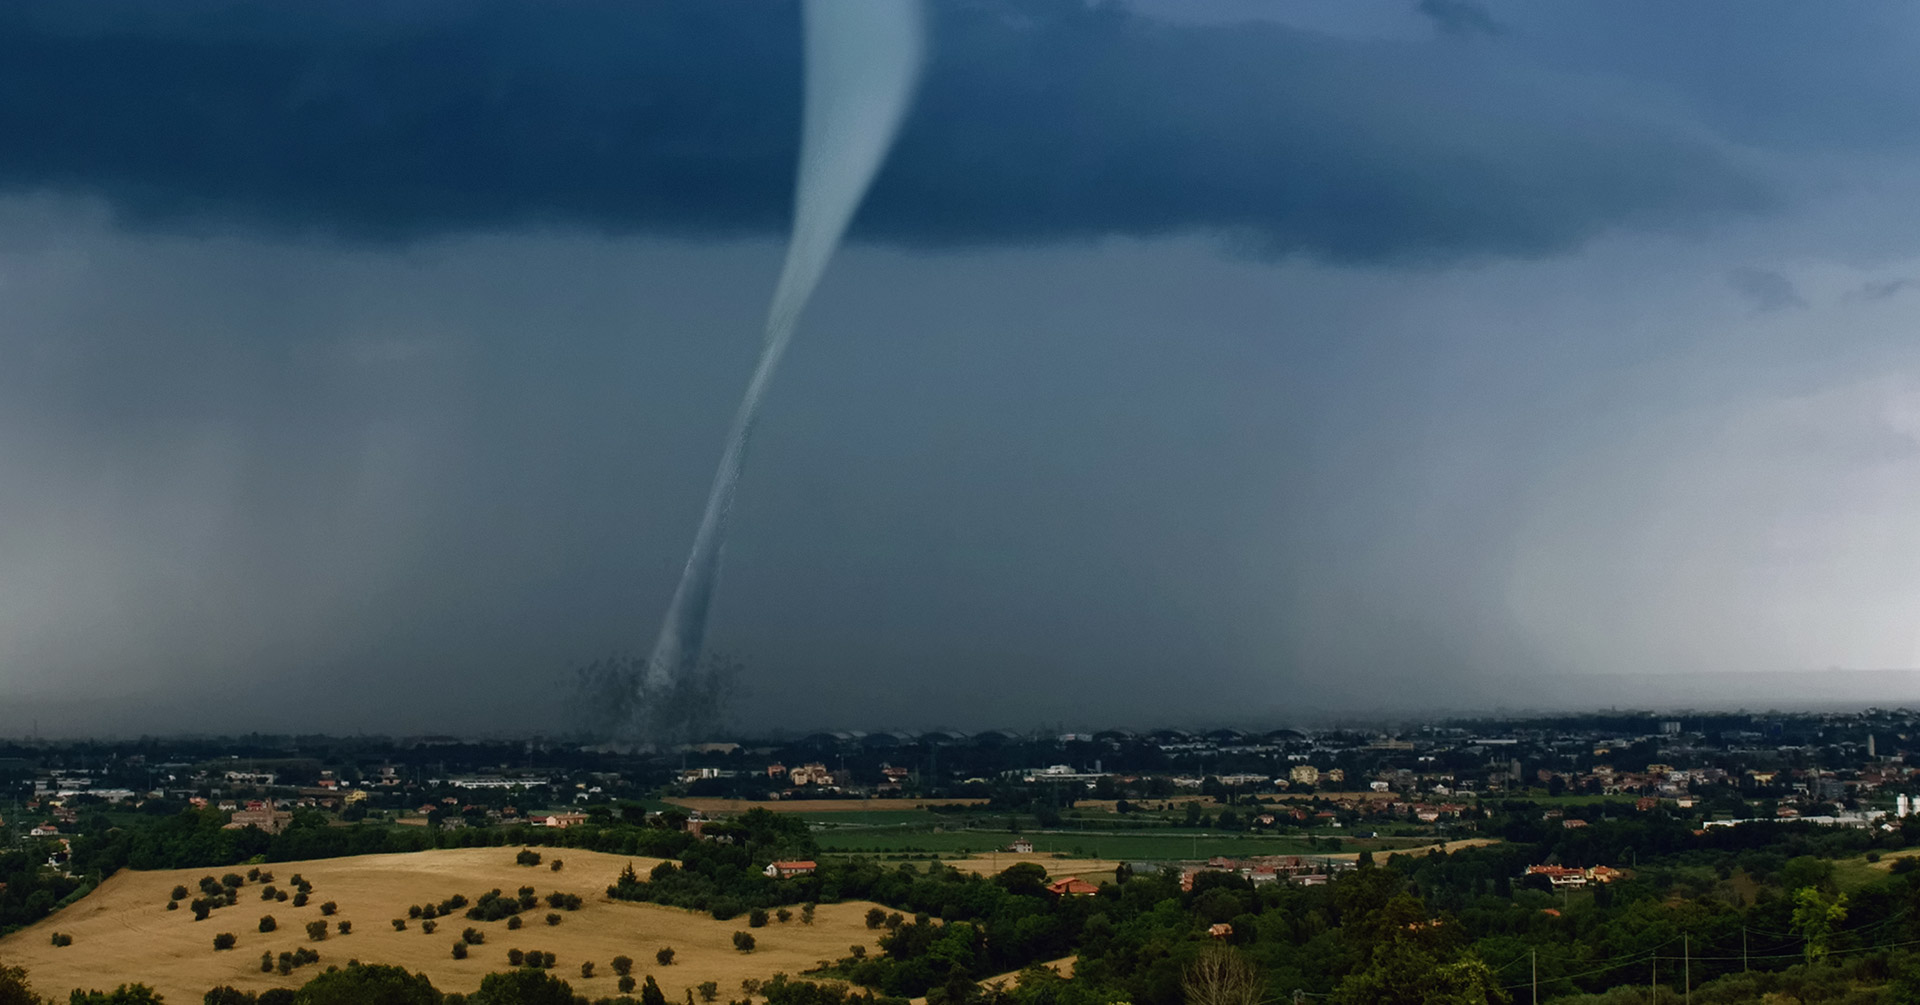 tornado safety position